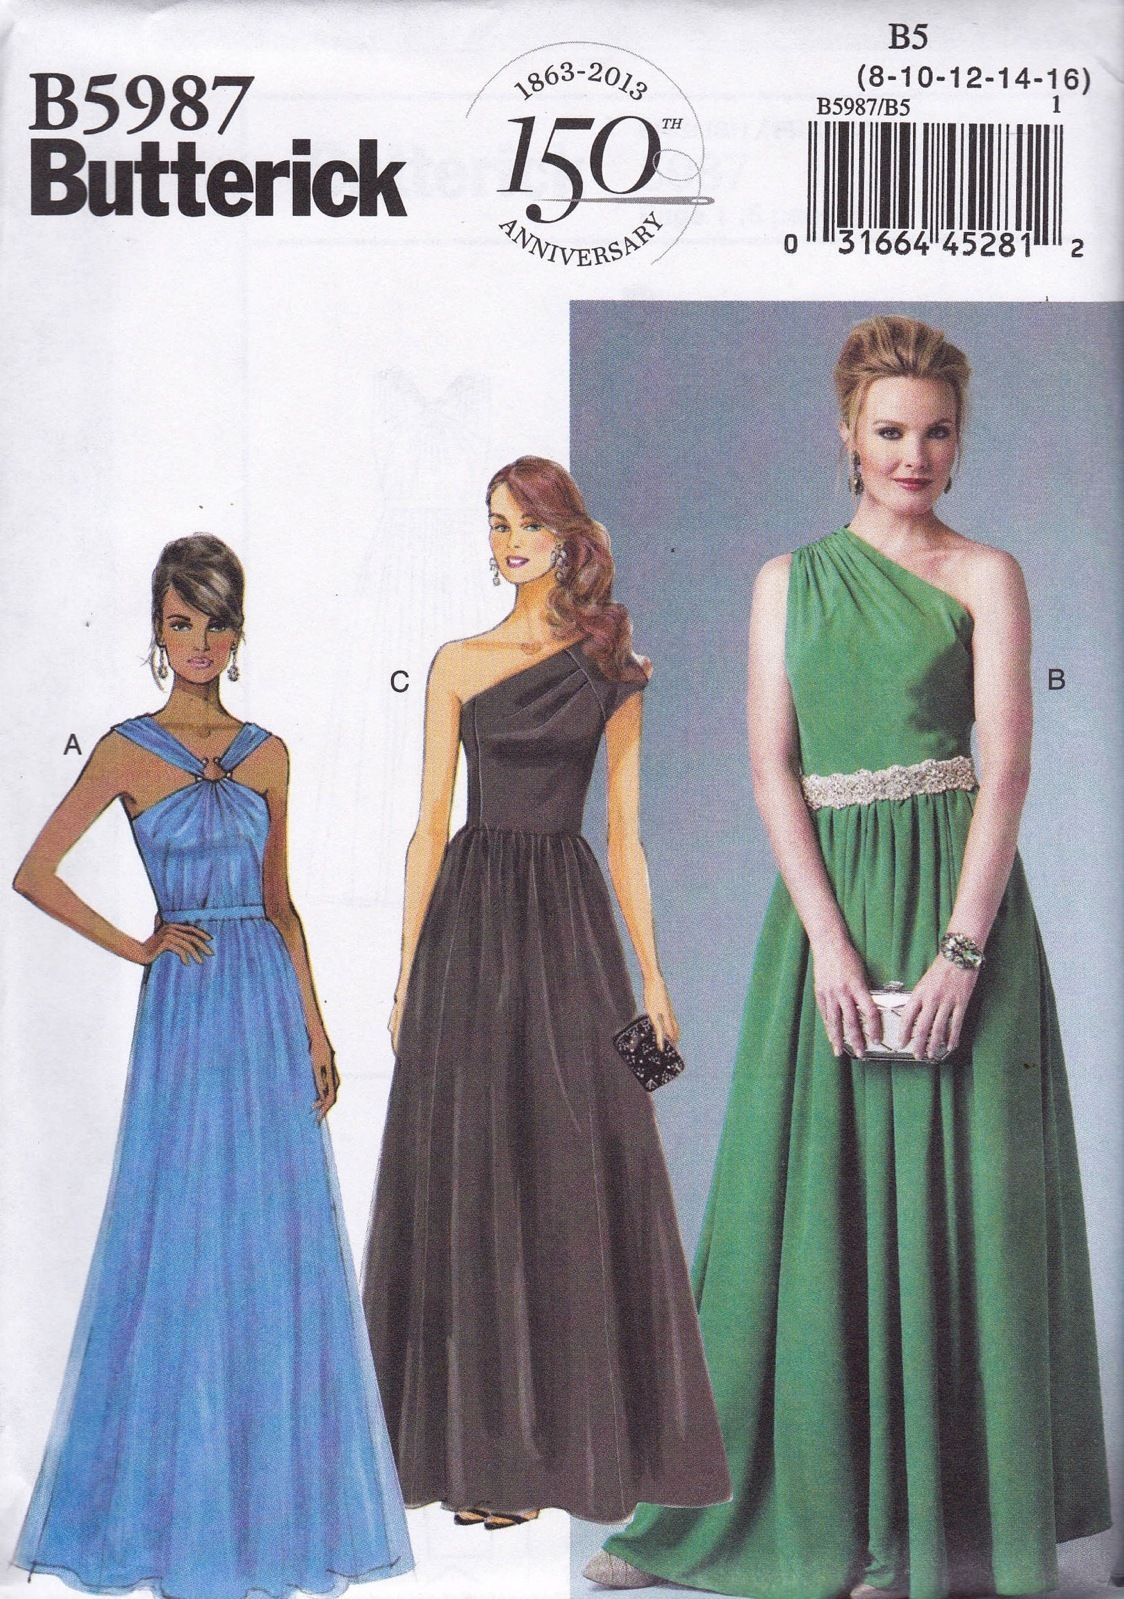 21+ Elegant Photo of Prom Dress Sewing Patterns - figswoodfiredbistro.com